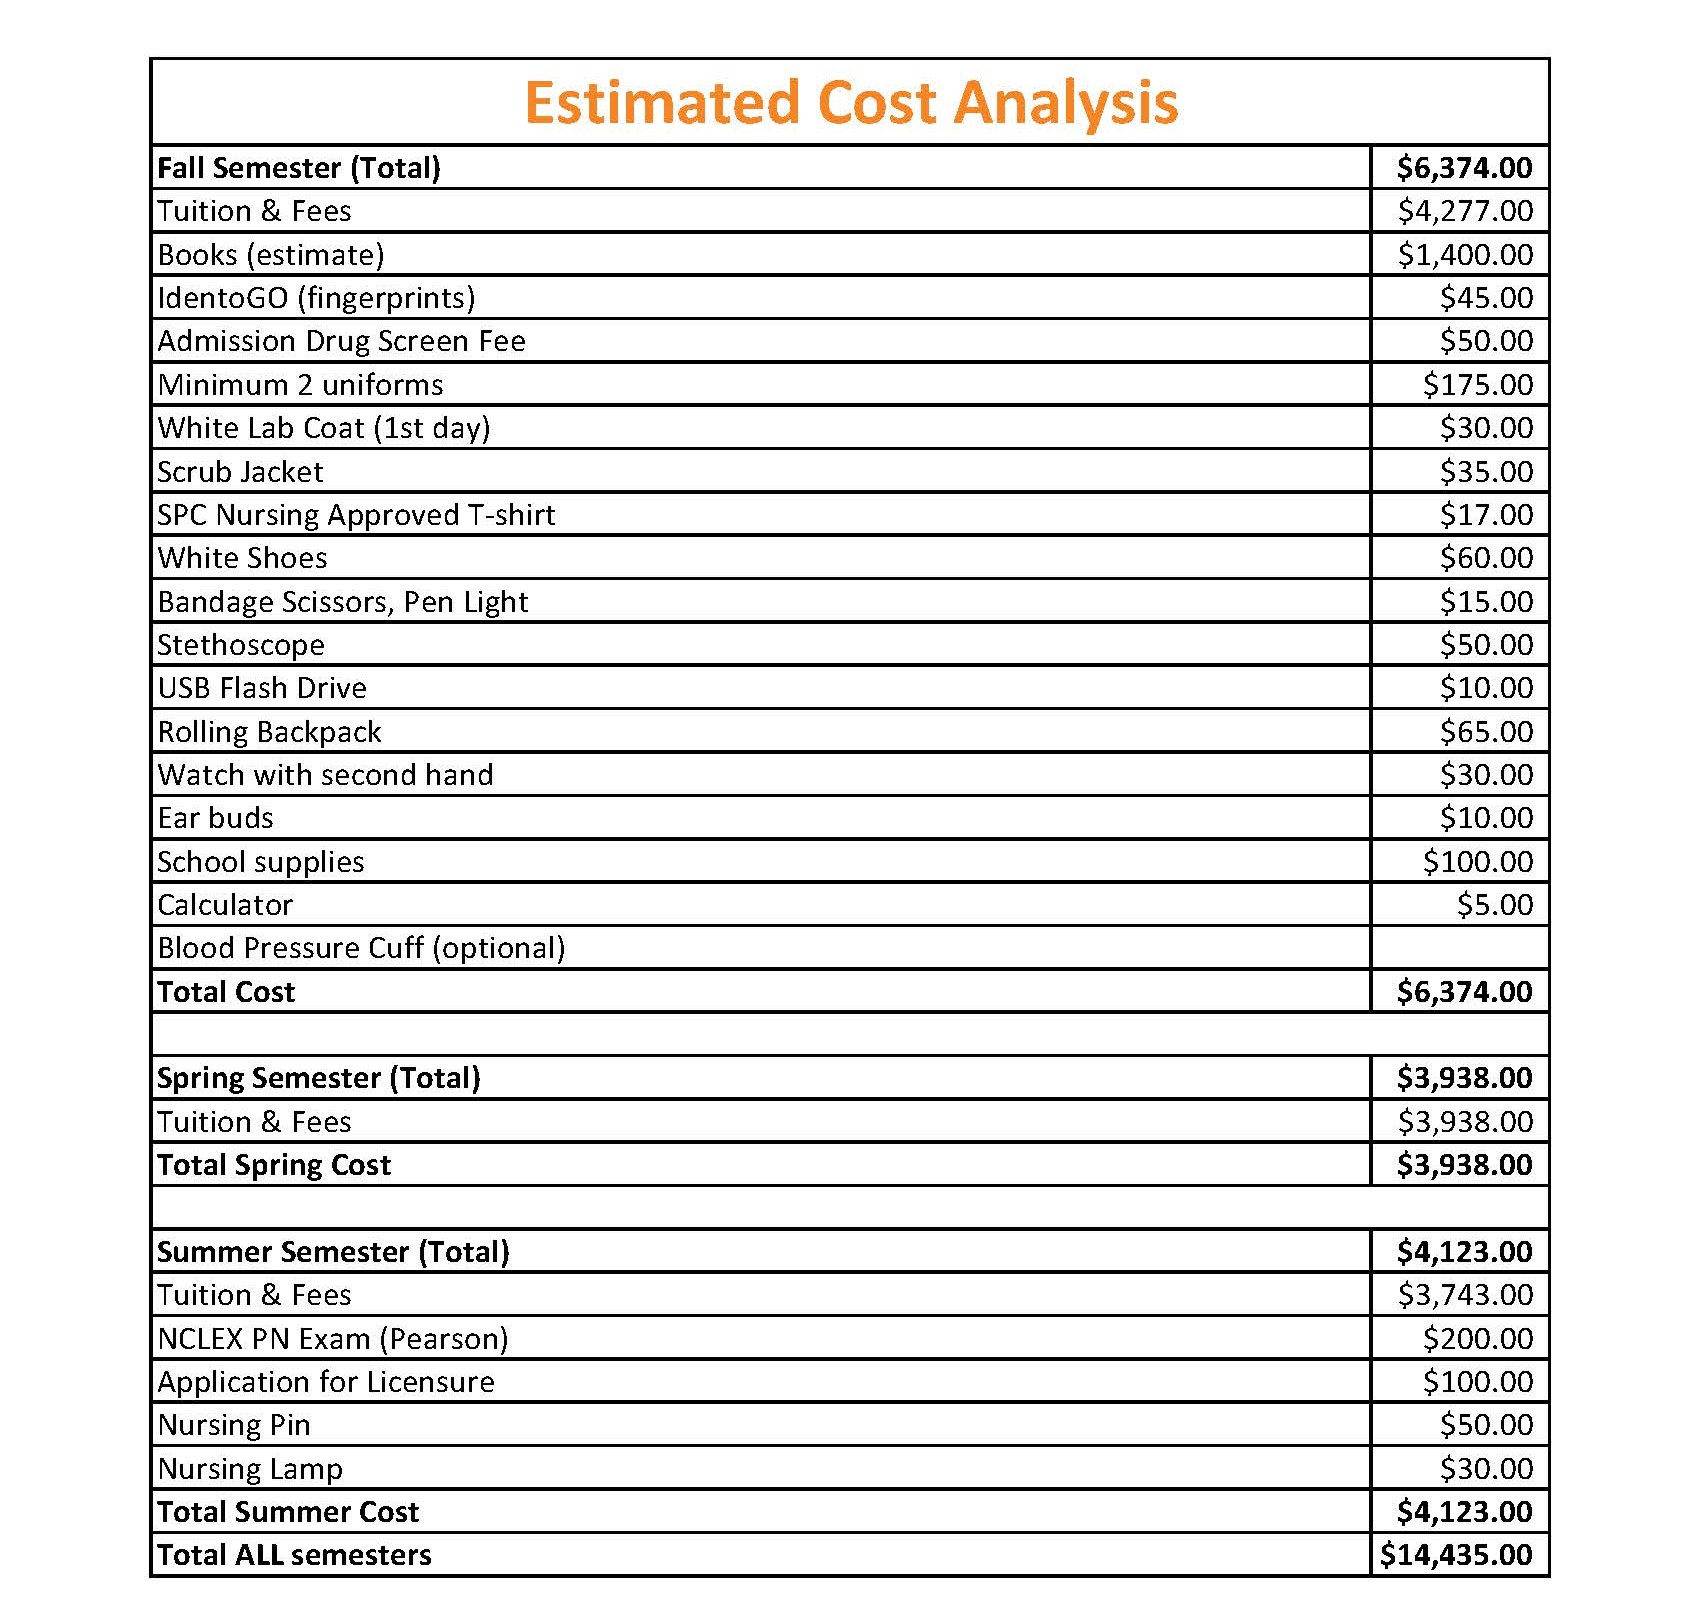 VN Estimated Cost